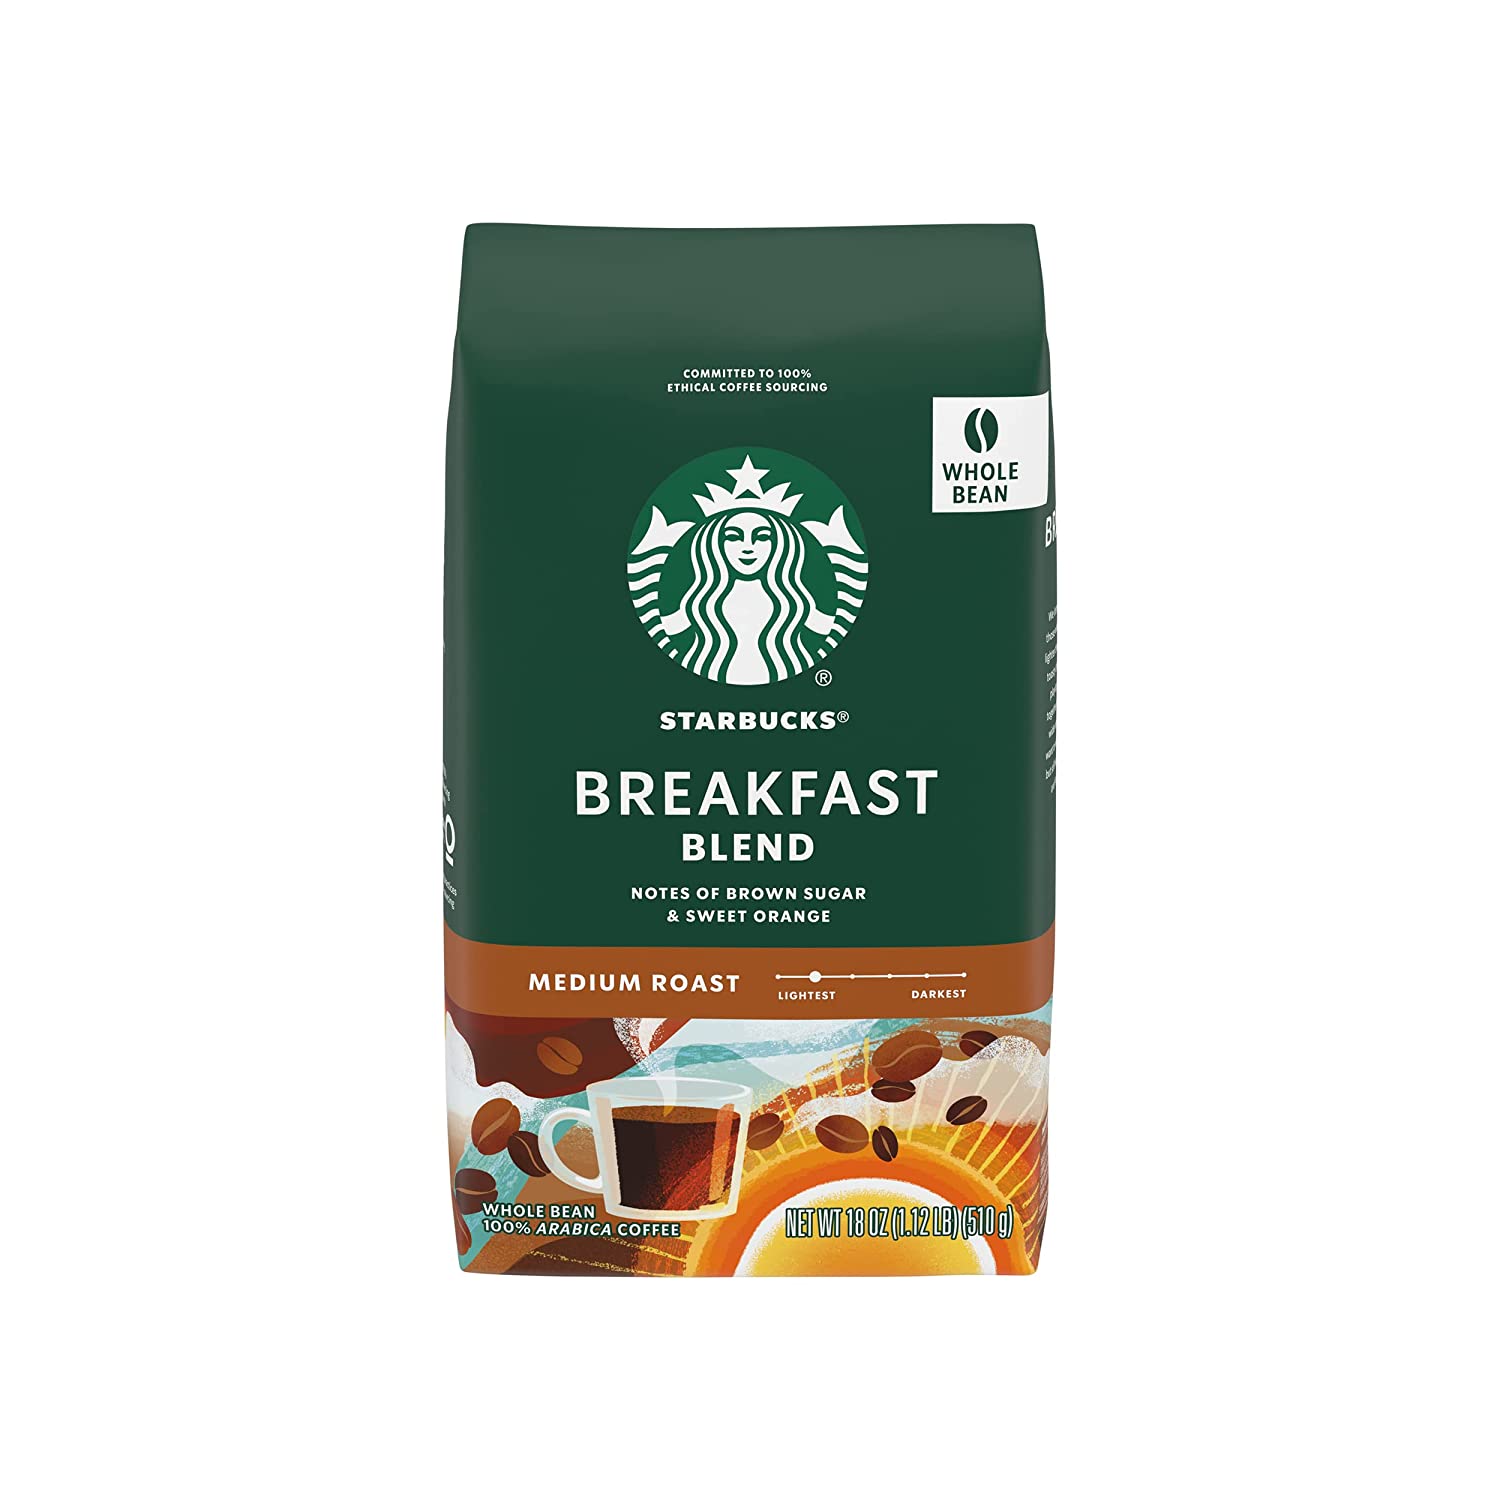 18-Oz Starbucks Medium Roast Whole Bean Coffee (Breakfast Blend) $5.41 w/ S&S + Free Shipping w/ Prime or $25+